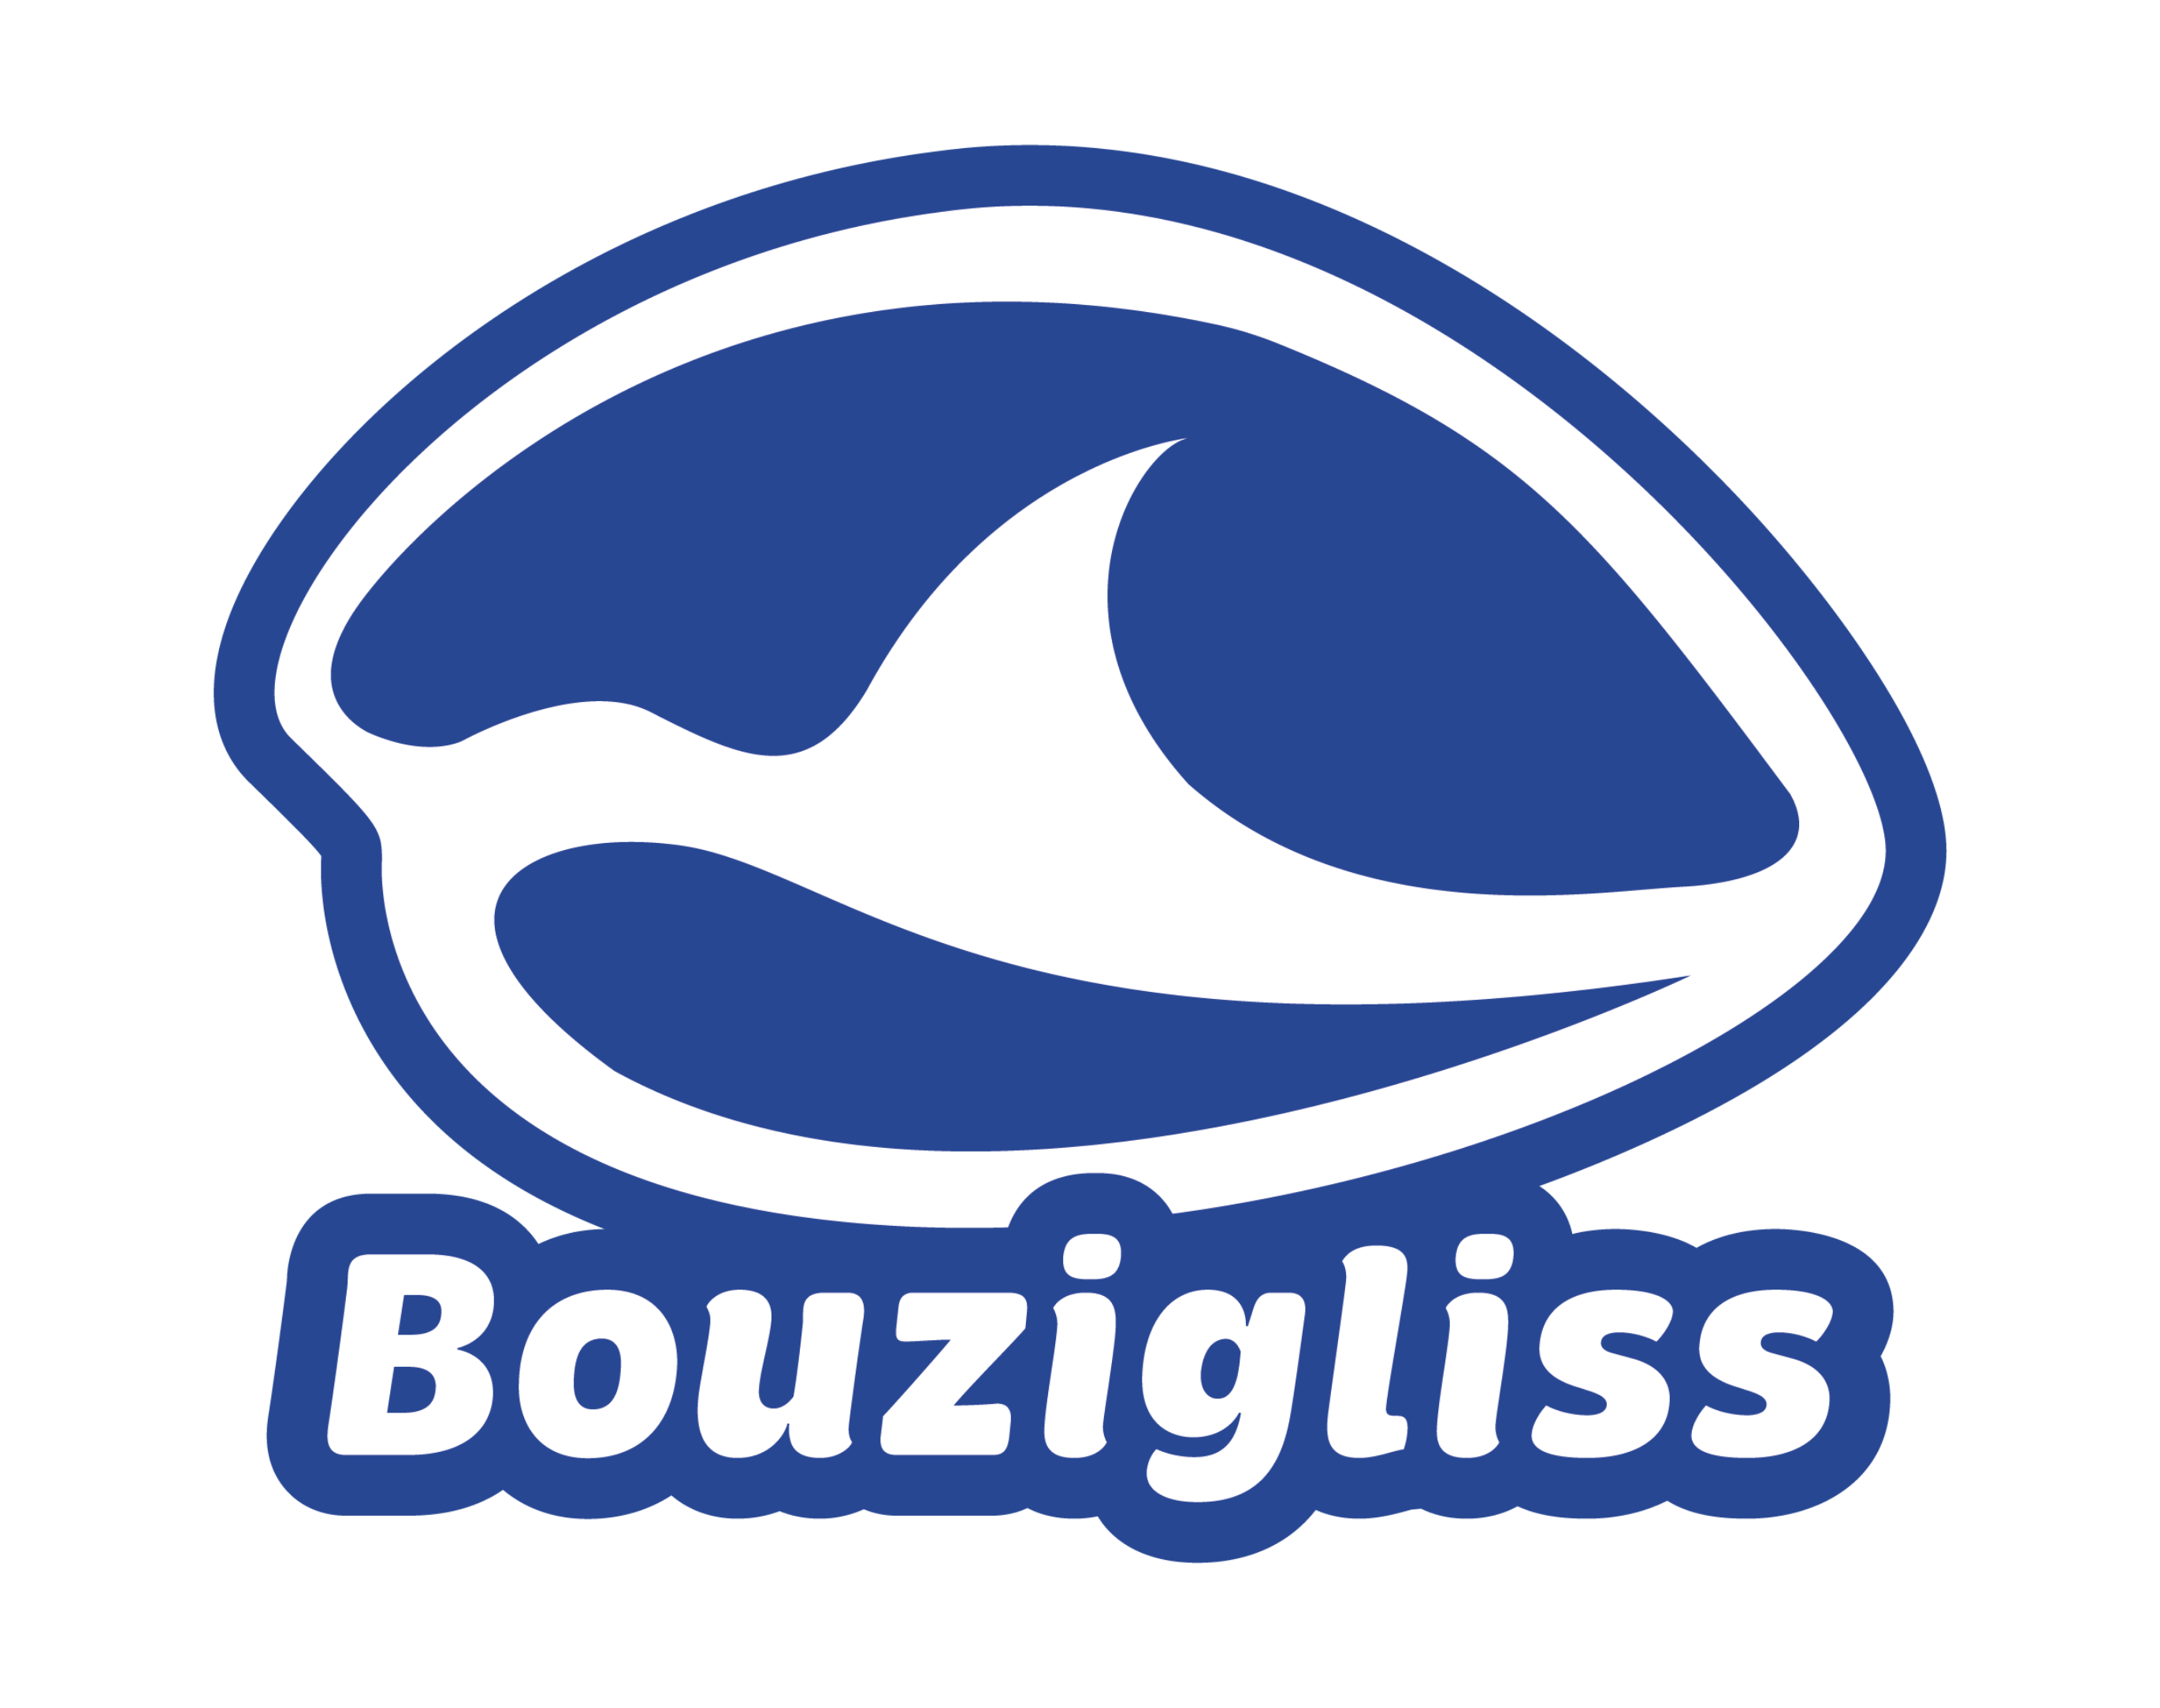 Bouzigliss